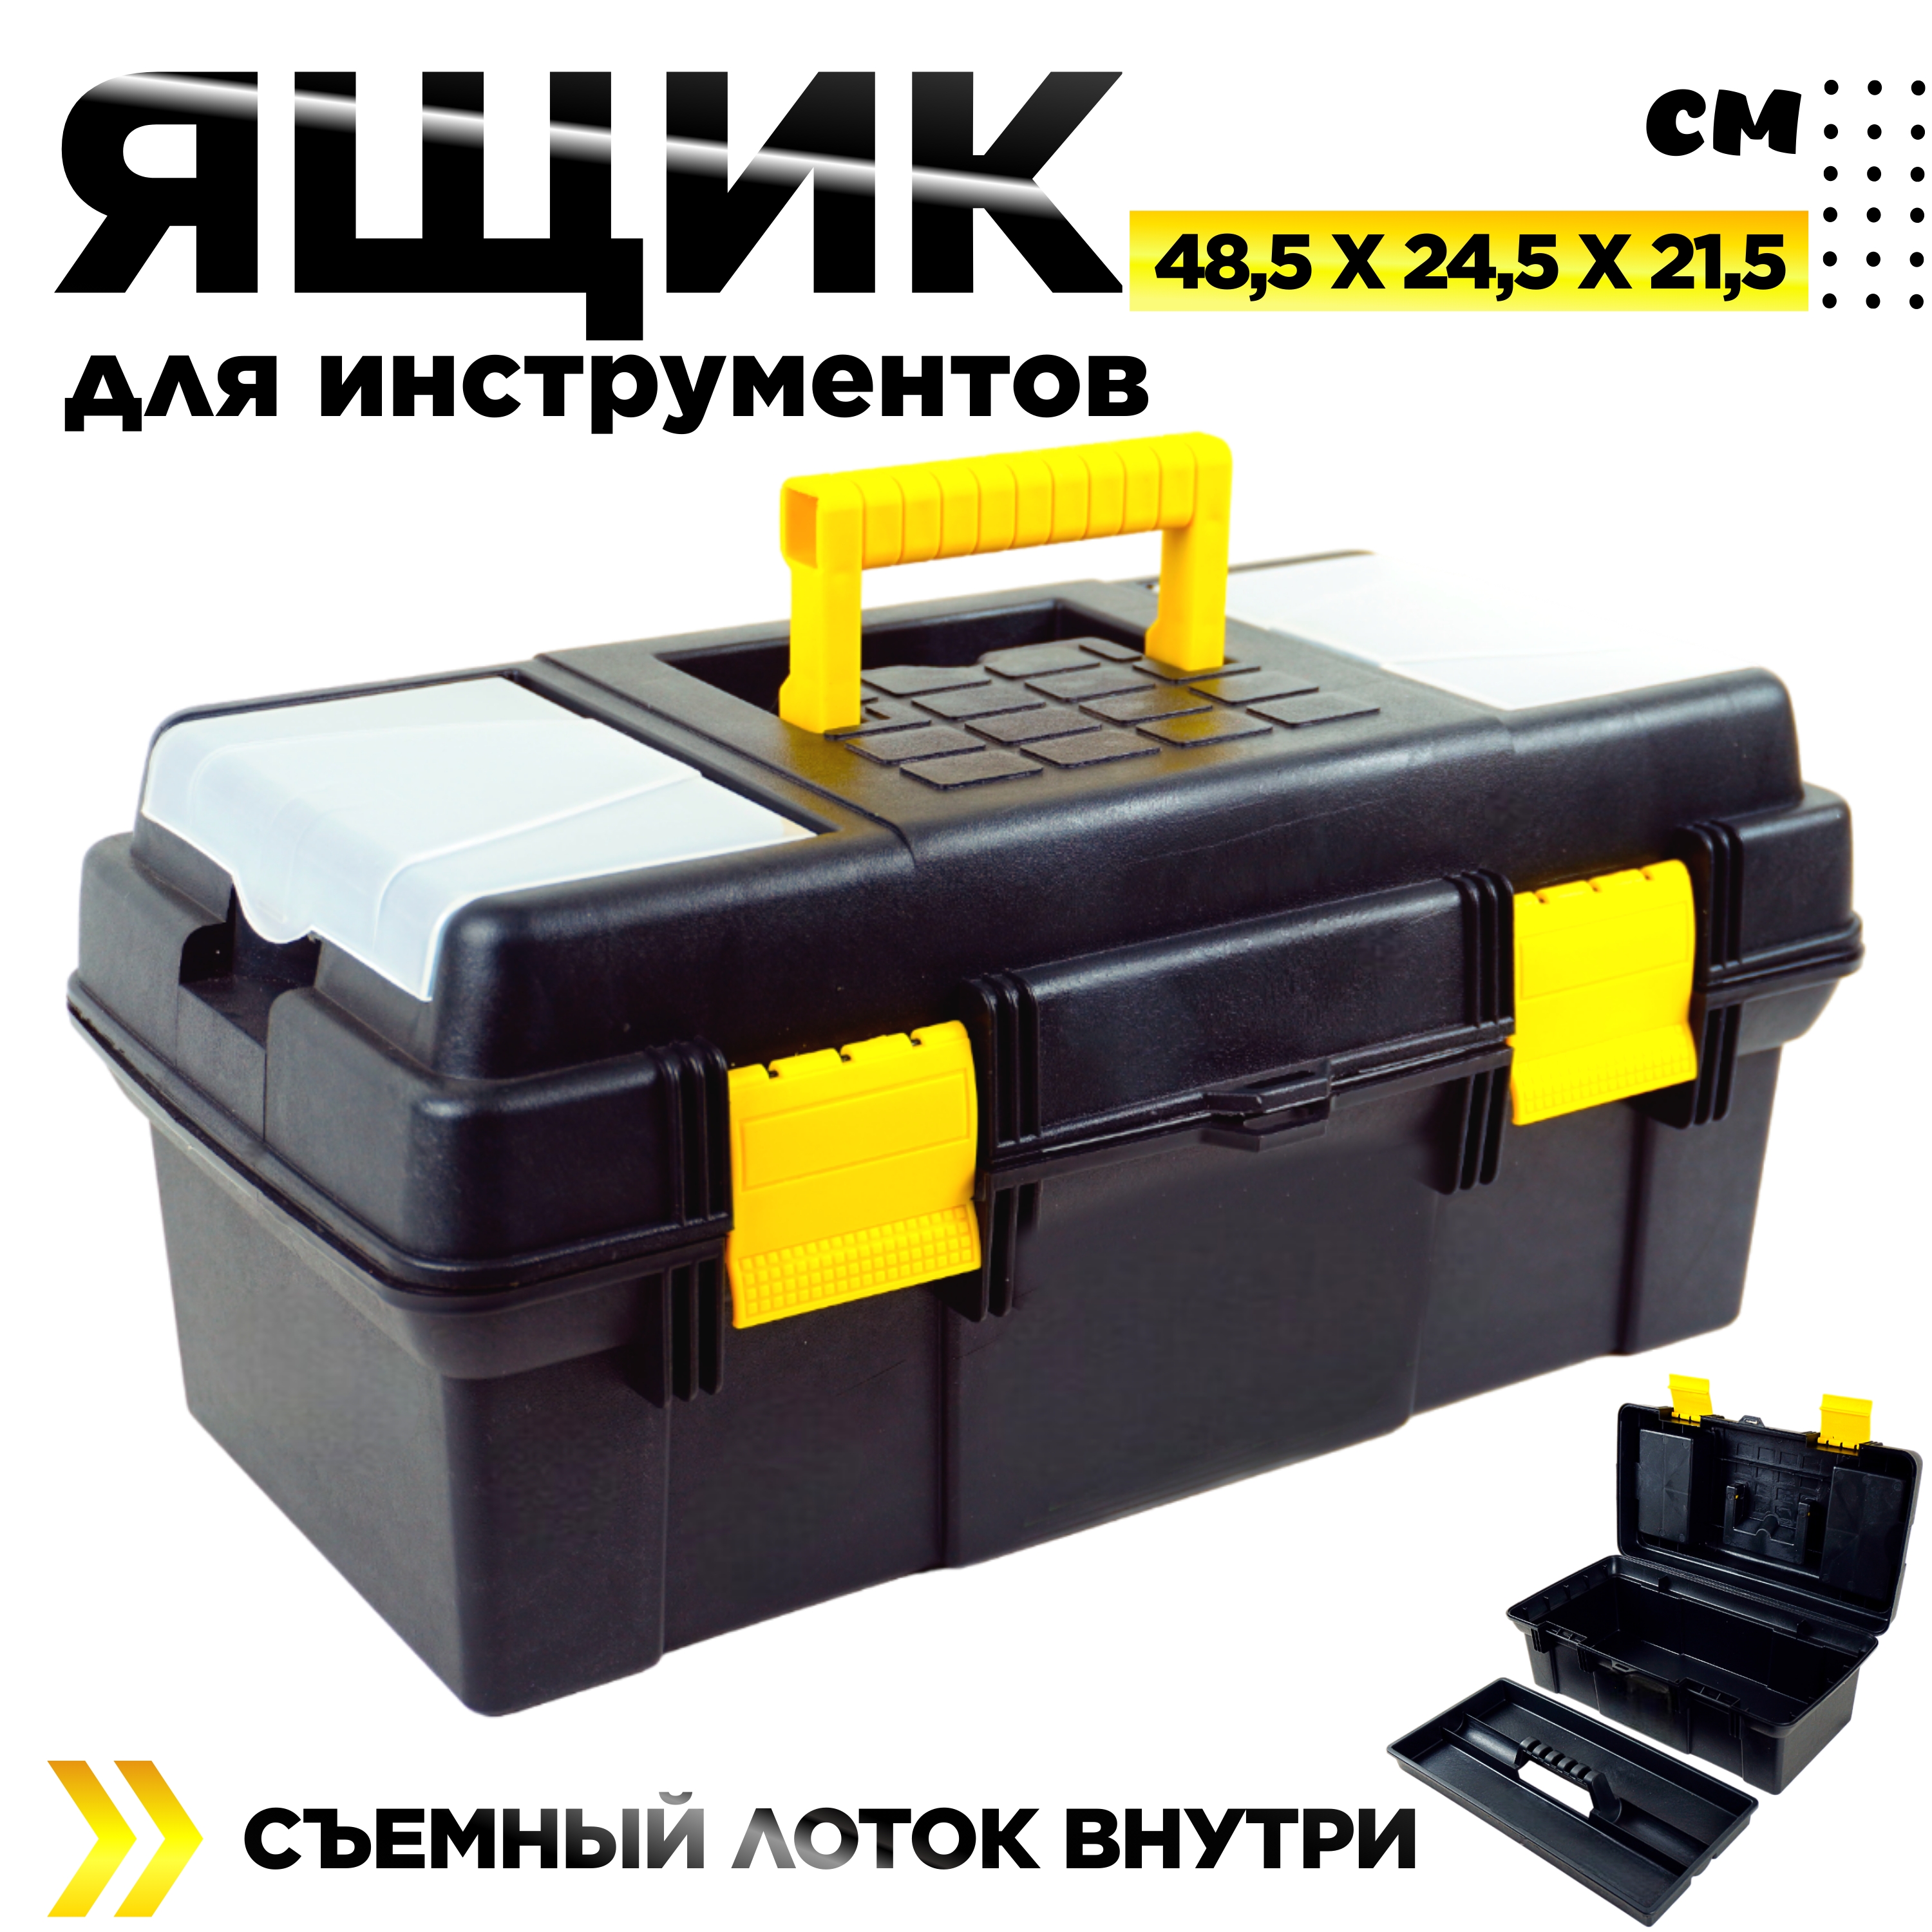 Ящик для инструментов Дельта Мастер 19 дюймов 485 х 245 х 215 мм ящик для инструментов дельта эксперт 19 дюймов 490 х 275 х 240 мм